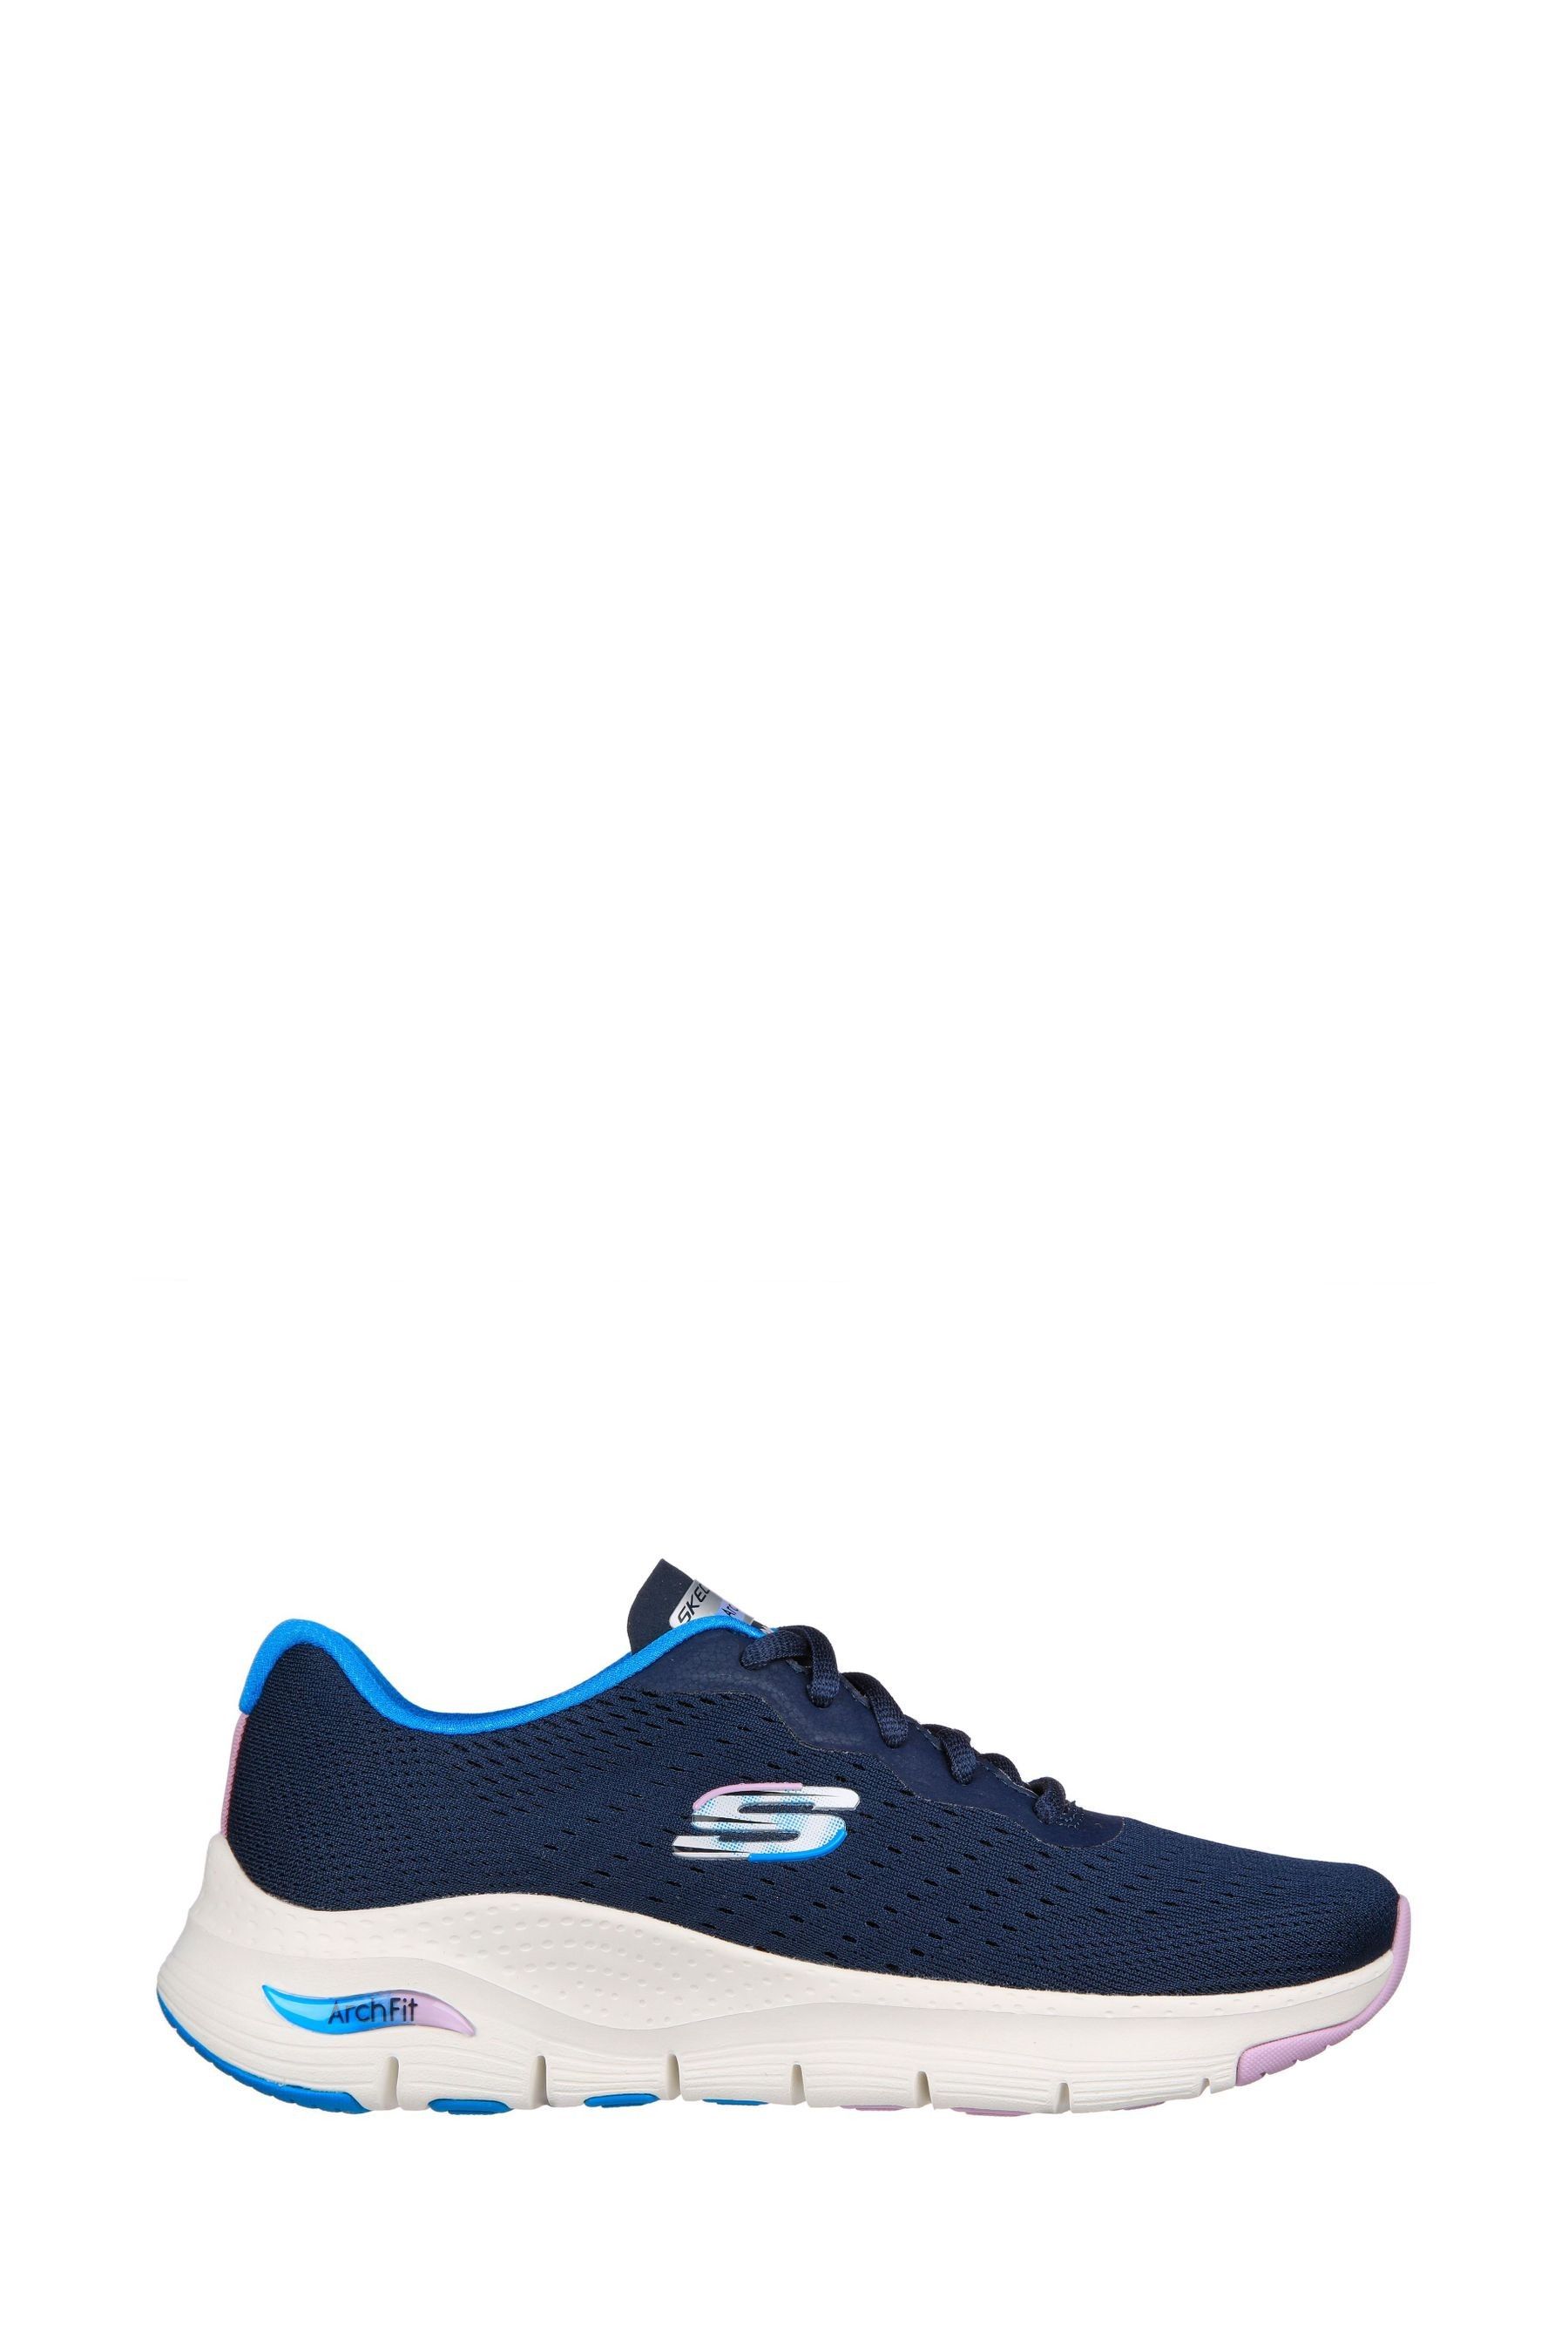 Спортивная обувь Arch Fit Infinity Cool Skechers, синий